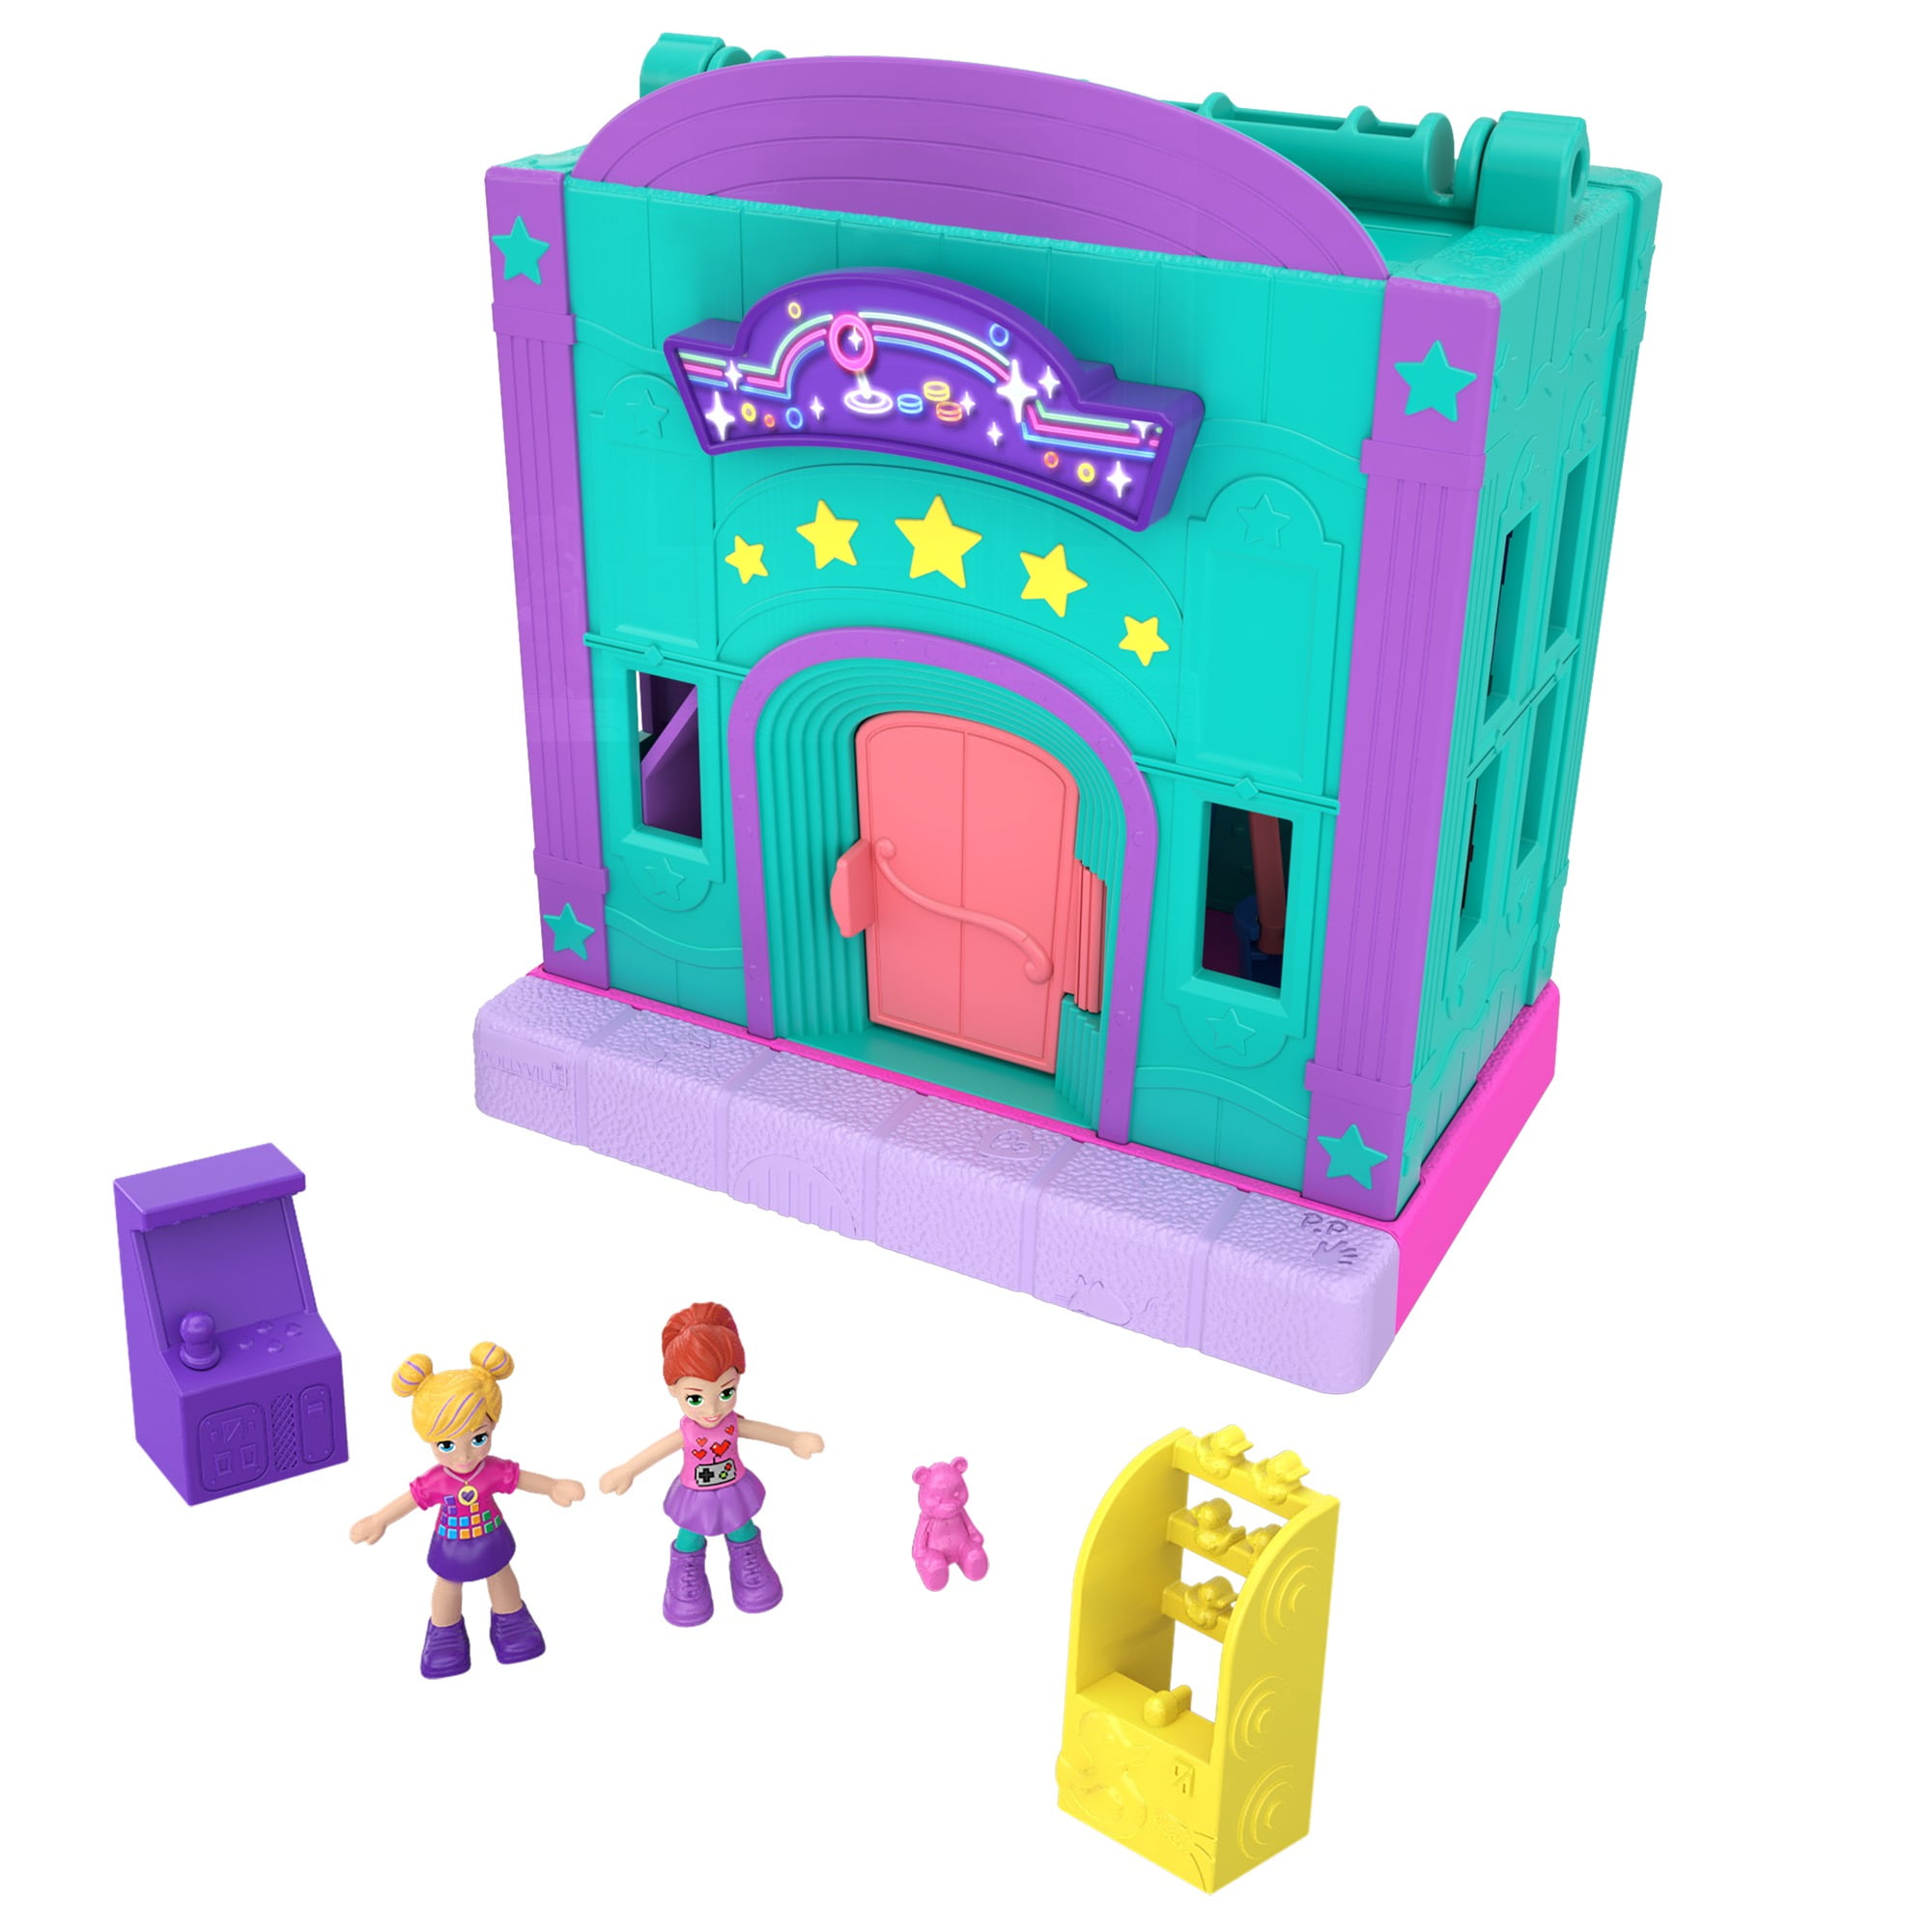 Polly Pocket Pollyville Arcade Playset with Micro Polly